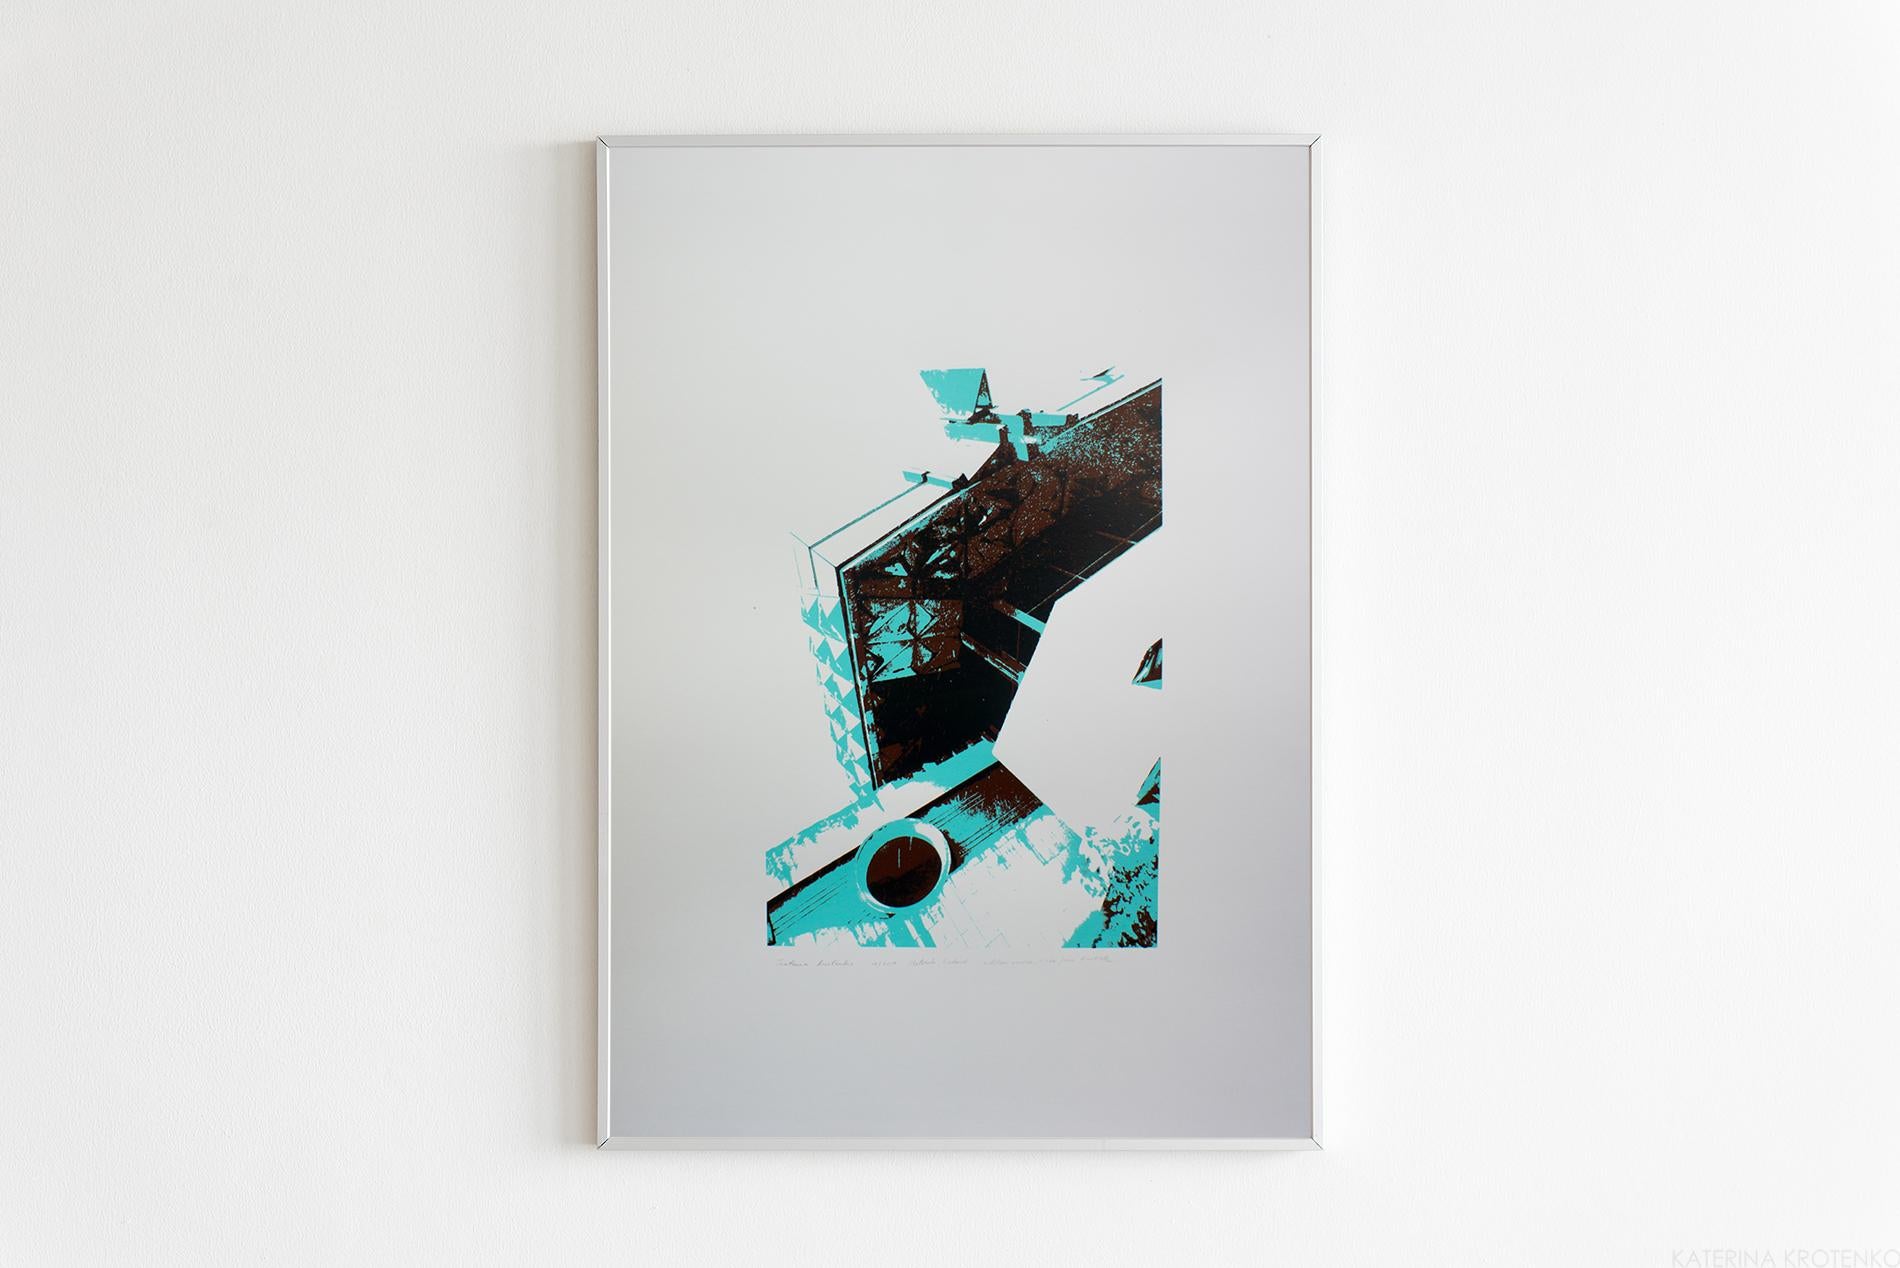 Katerina Krotenko Abstract Print - Invisible treasures # 1 architectural serigraphy